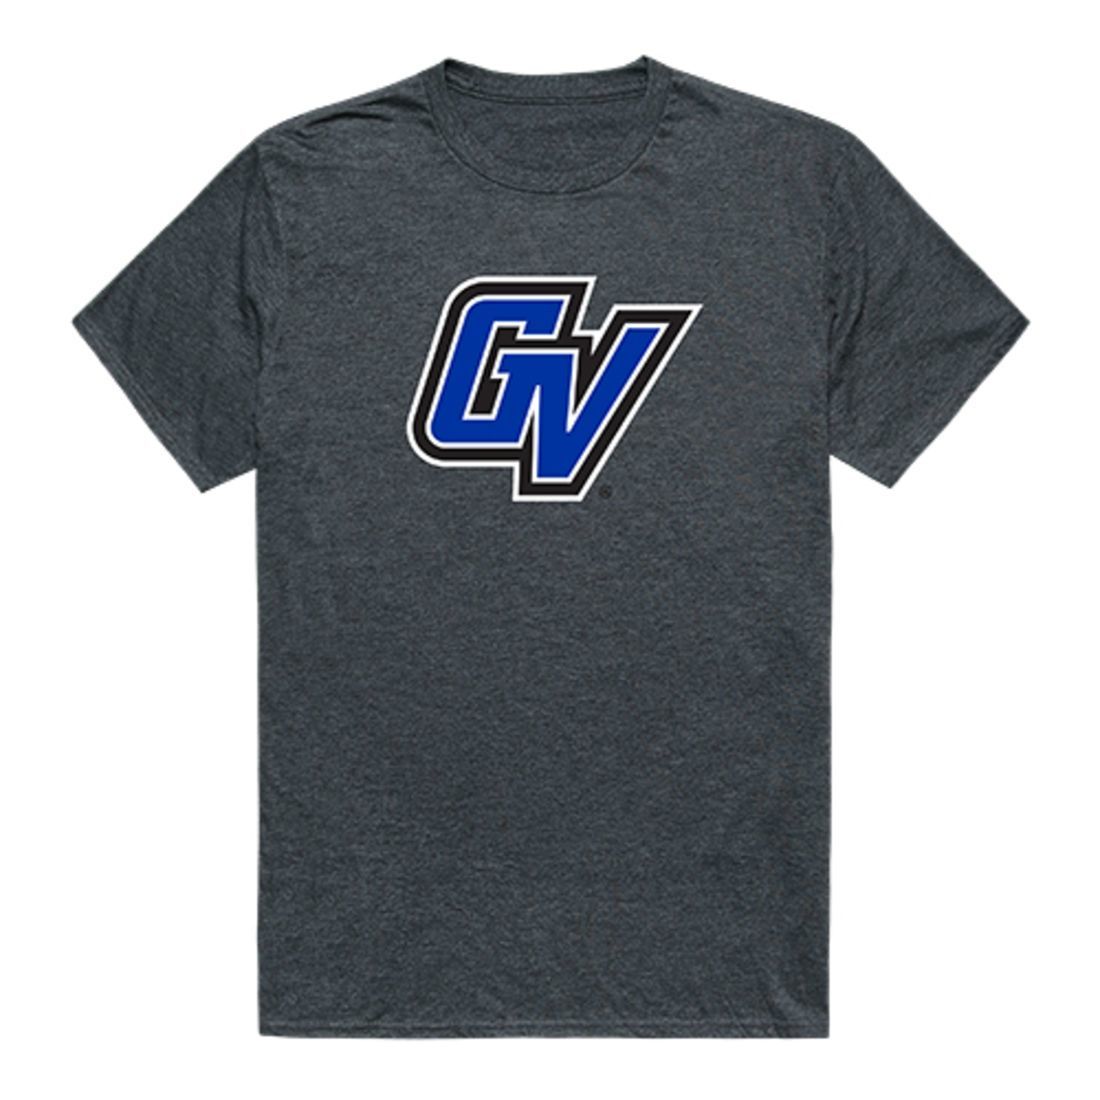 GVSU Grand Valley State University Lakers Cinder Tee T-Shirt Heather Charcoal-Campus-Wardrobe